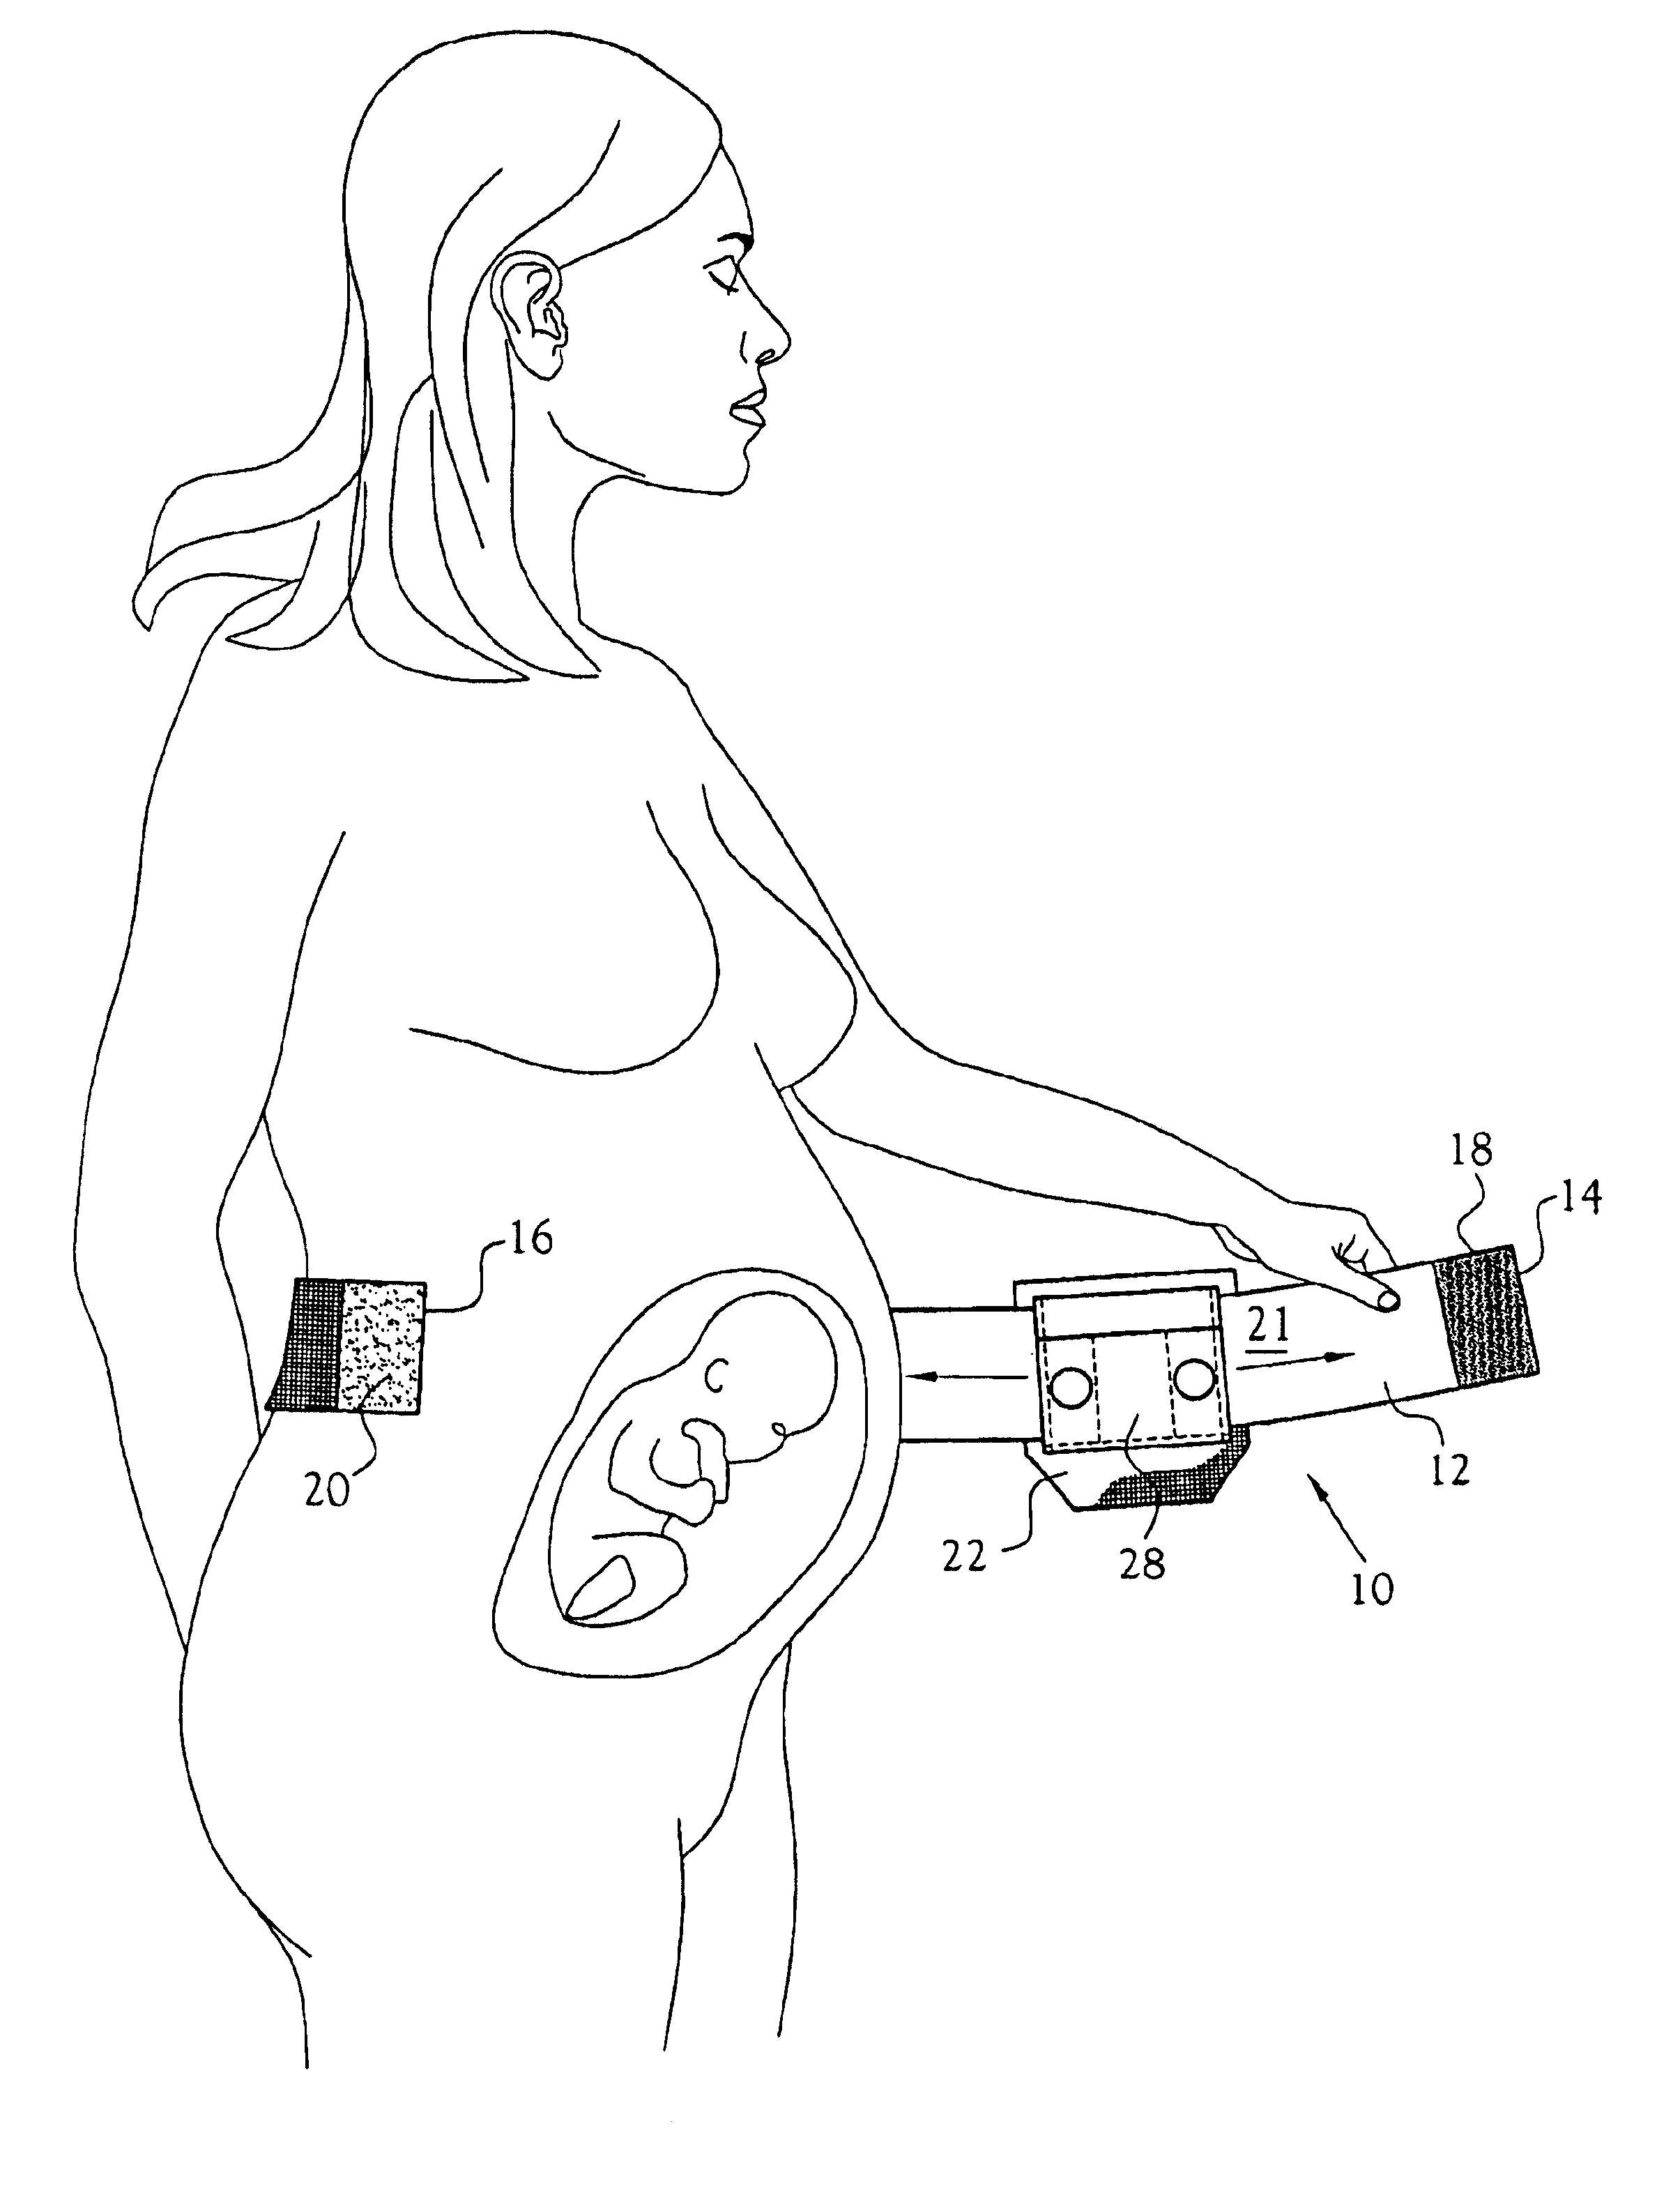 Fetal educator strap